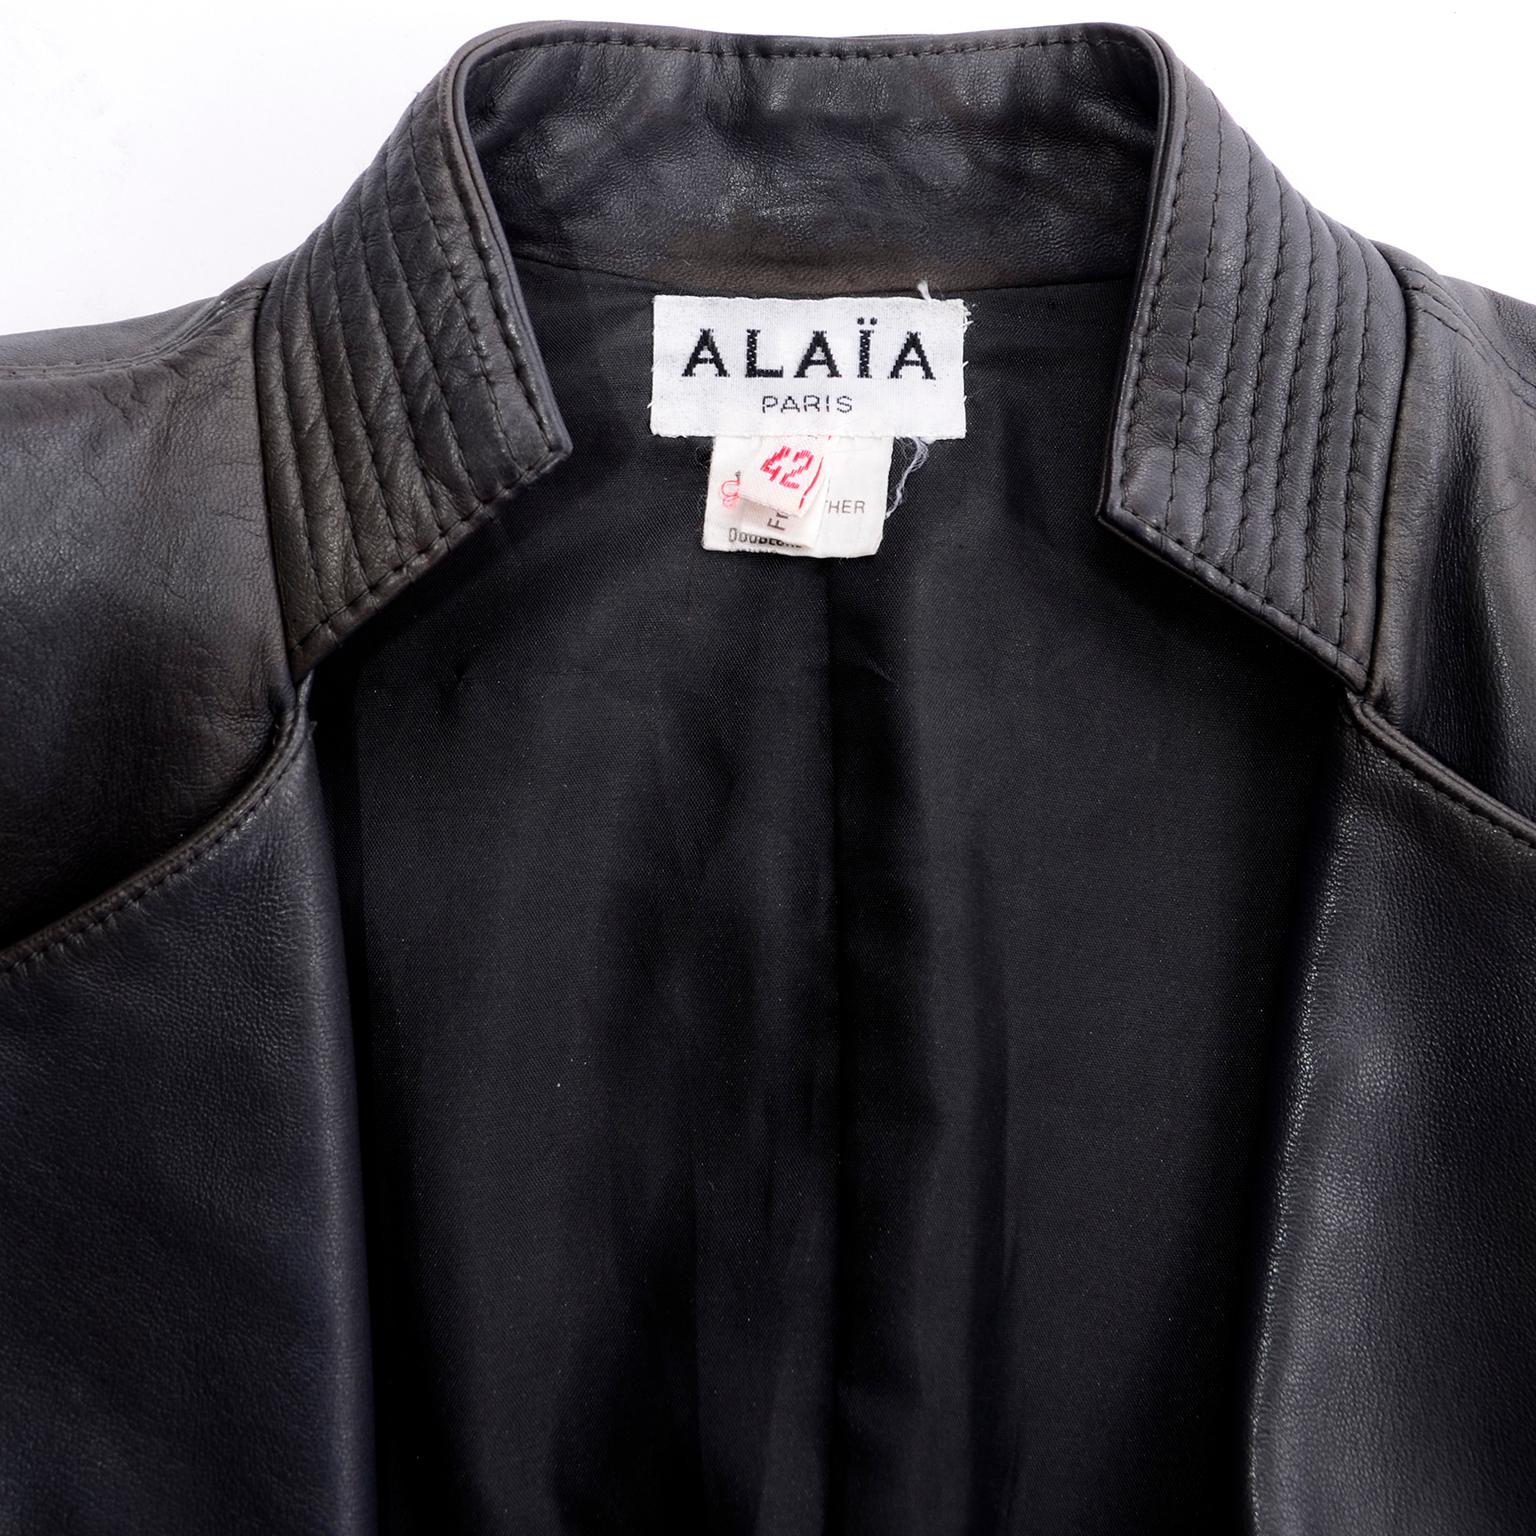 1980s Azzedine Alaia Avant Garde Vintage Leather Jacket W/ Pockets 6